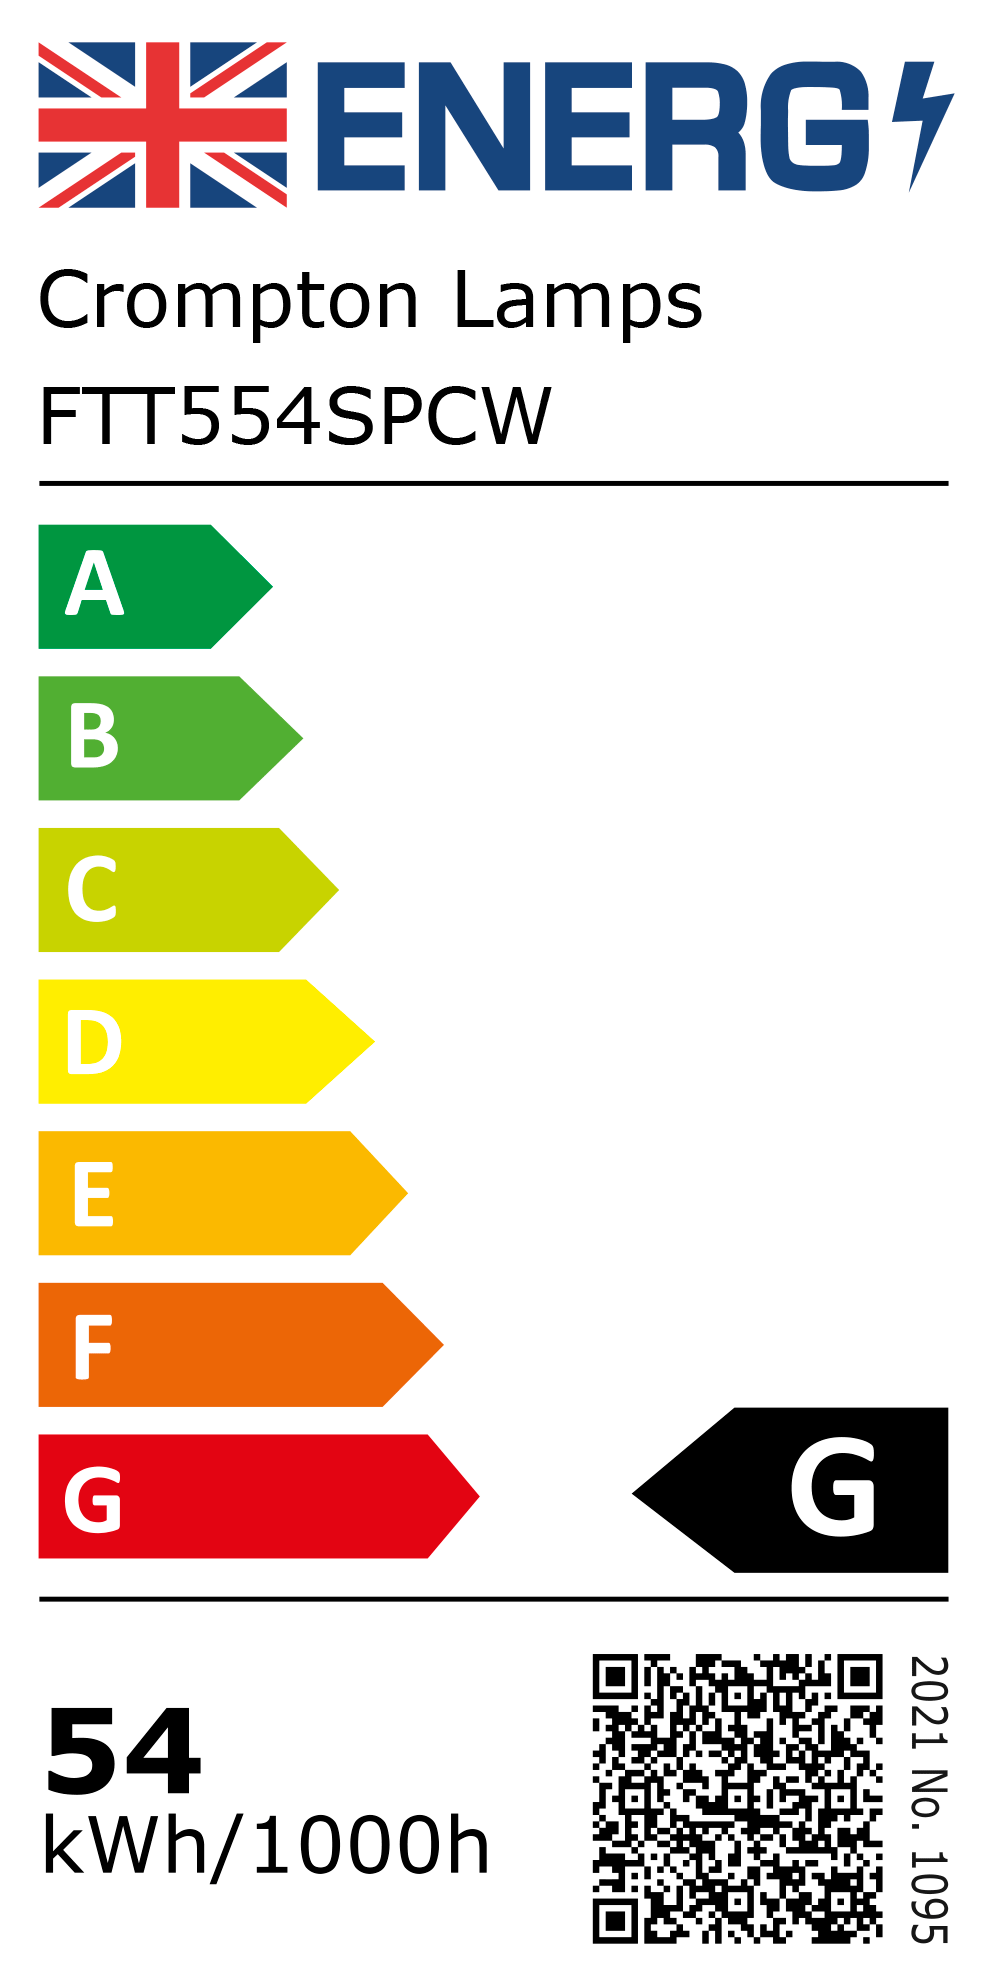 New 2021 Energy Rating Label: Stock Code FTT554SPCW